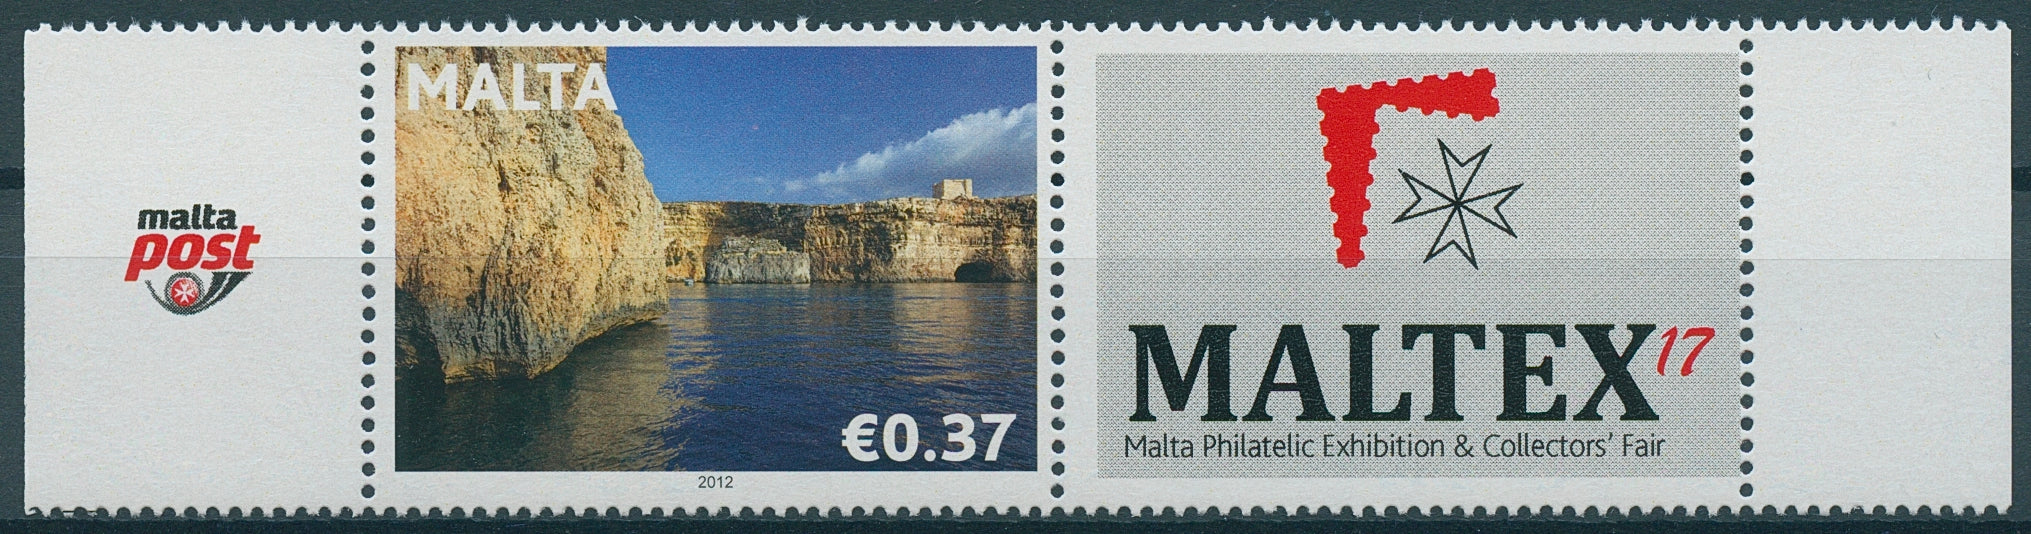 Malta 2017 MNH Maltex Philatelic Exhb & Collectors Fair 1v Set + Label Stamps